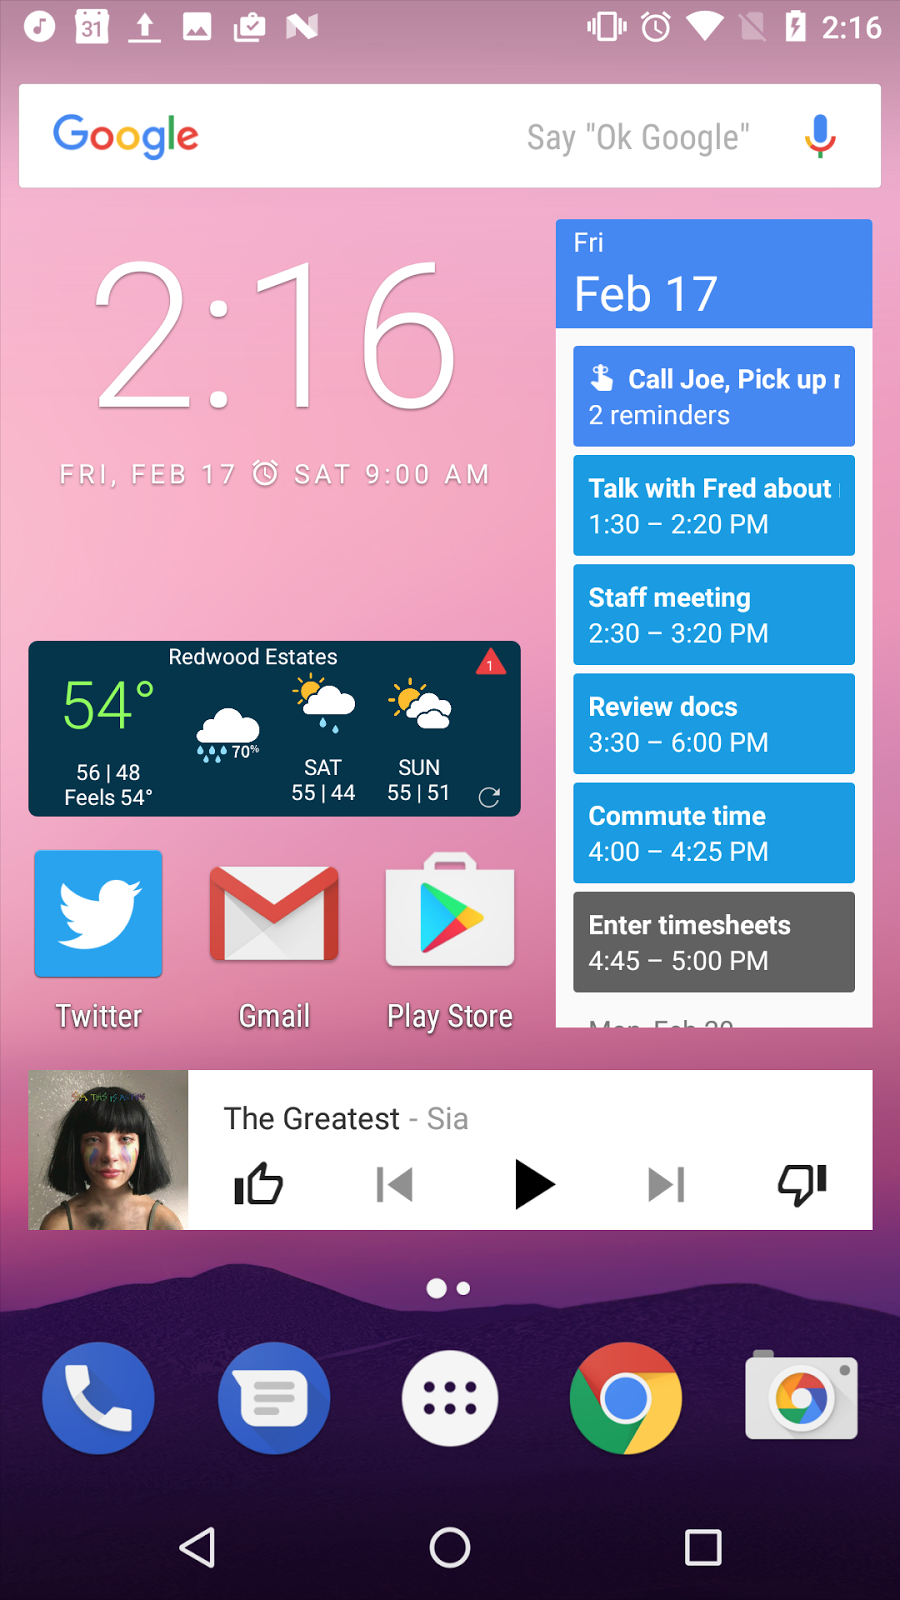  Clock, weather, calendar, and music-player app widgets